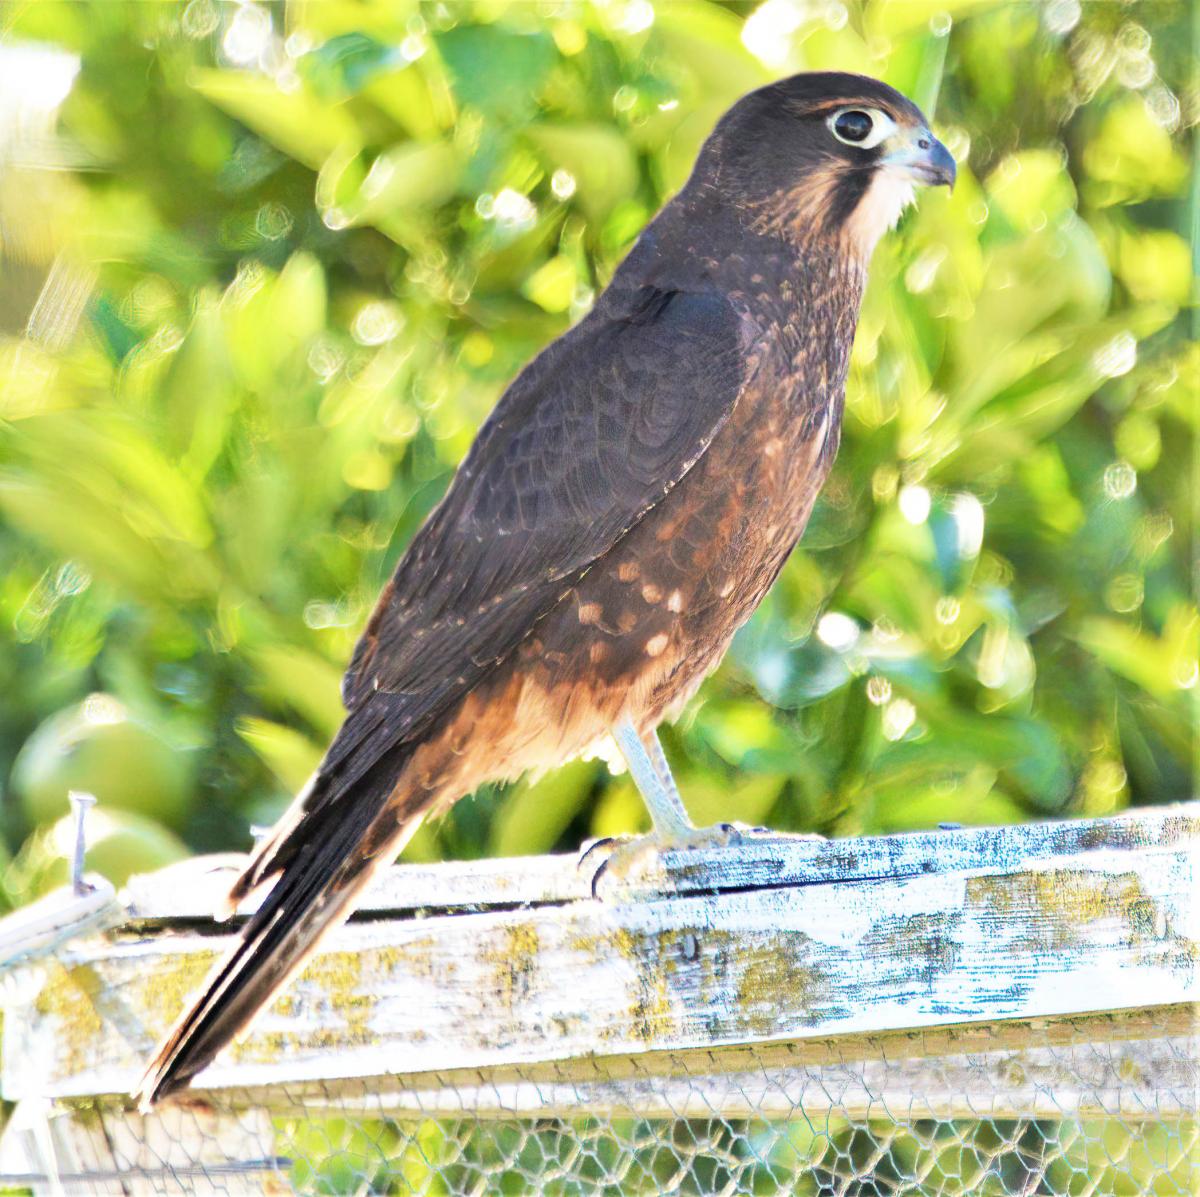 Nz Falcon on bird cage